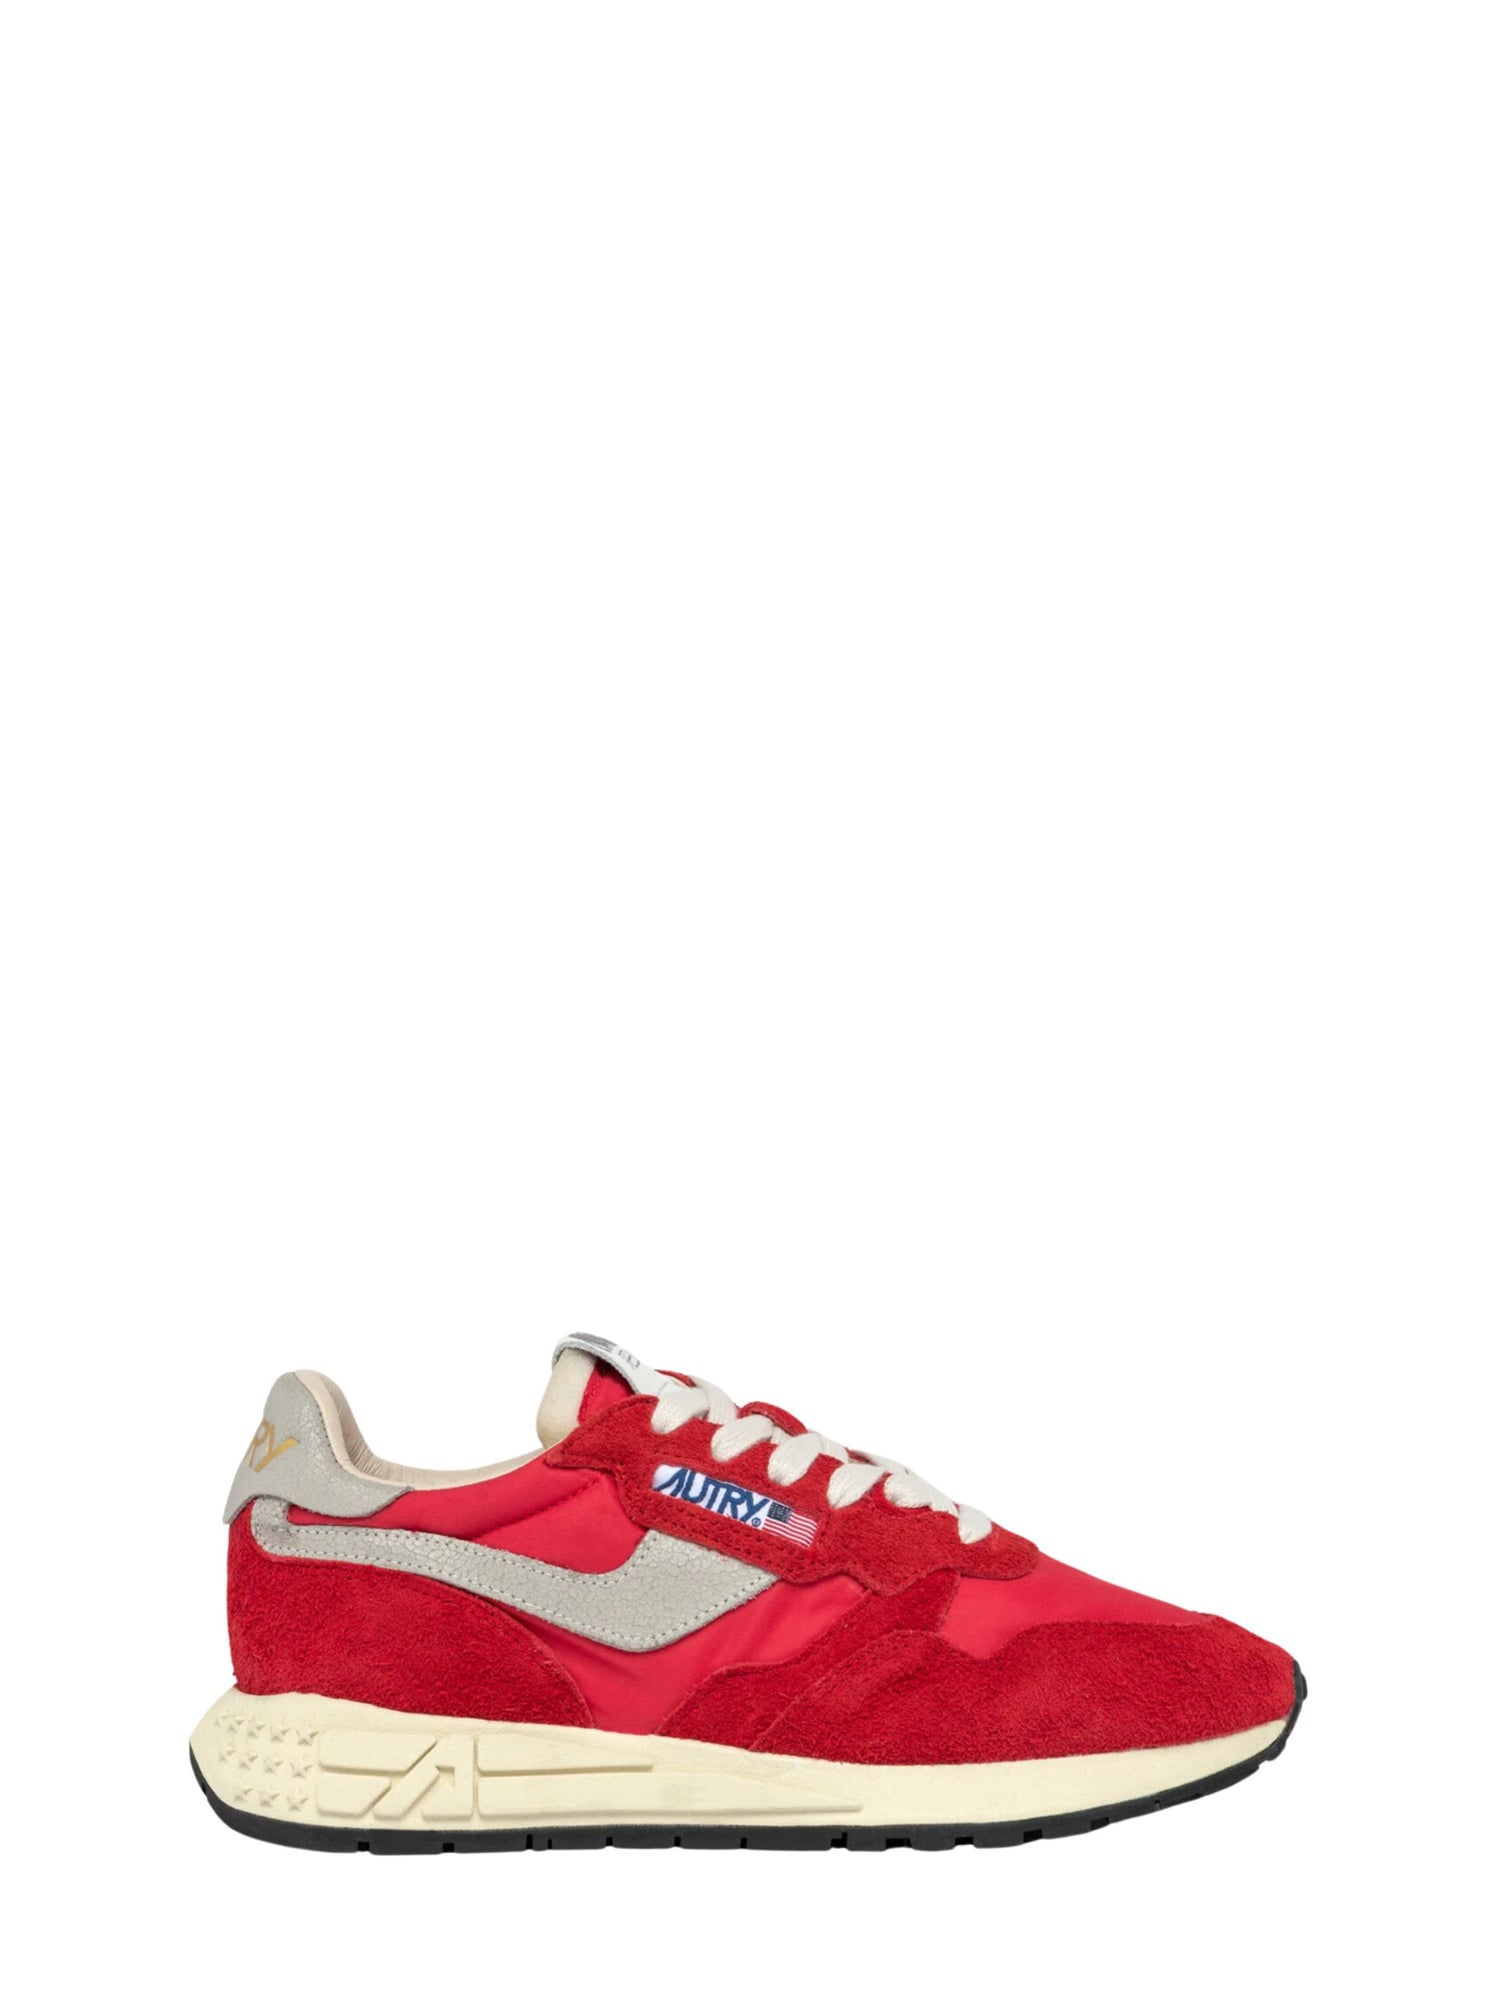 Reelwind Low sneaker, white/red